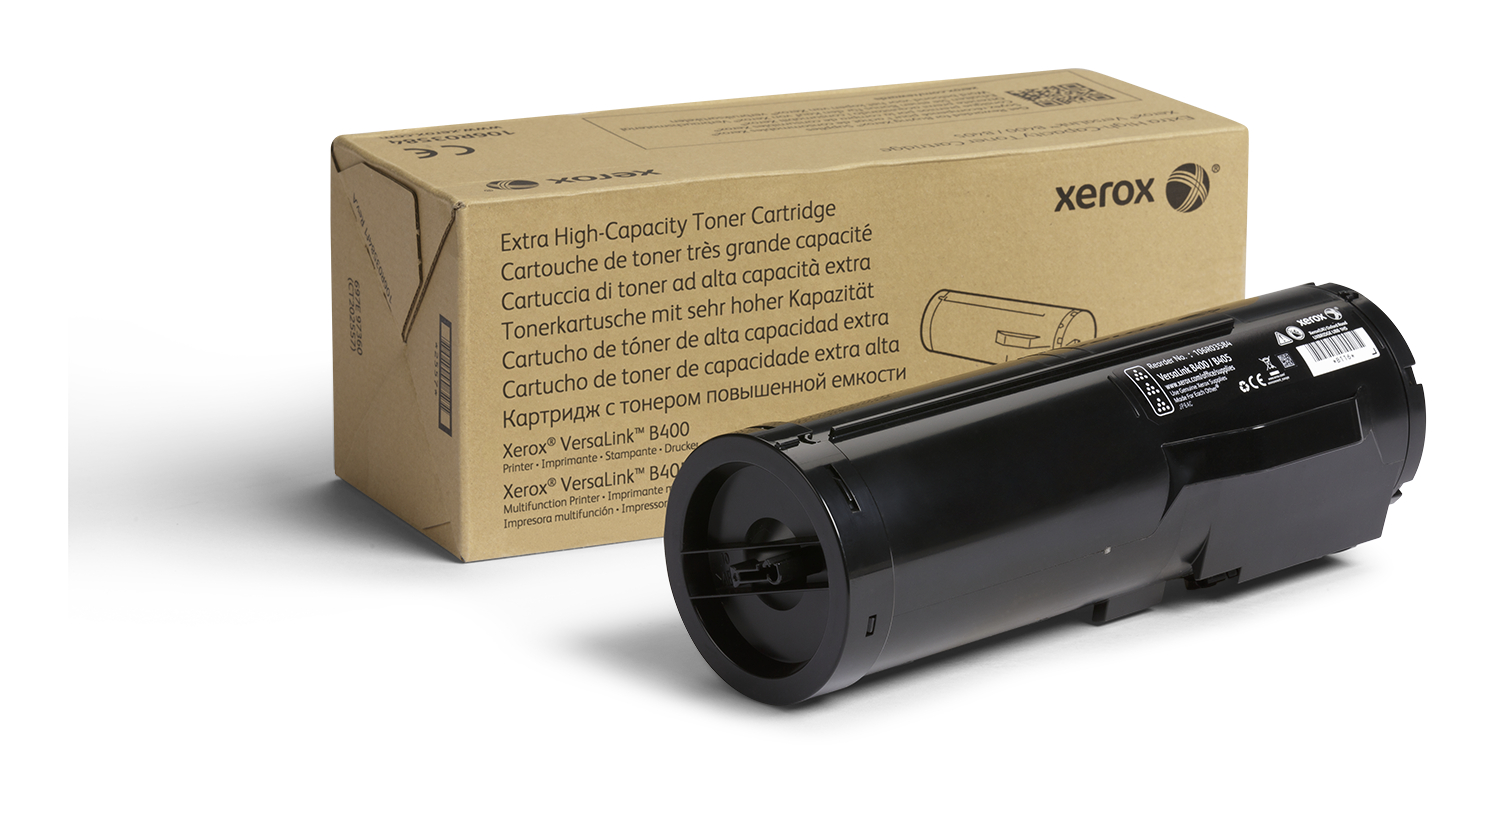 Genuine Xerox Extra High Capacity Toner Cartridge For The 